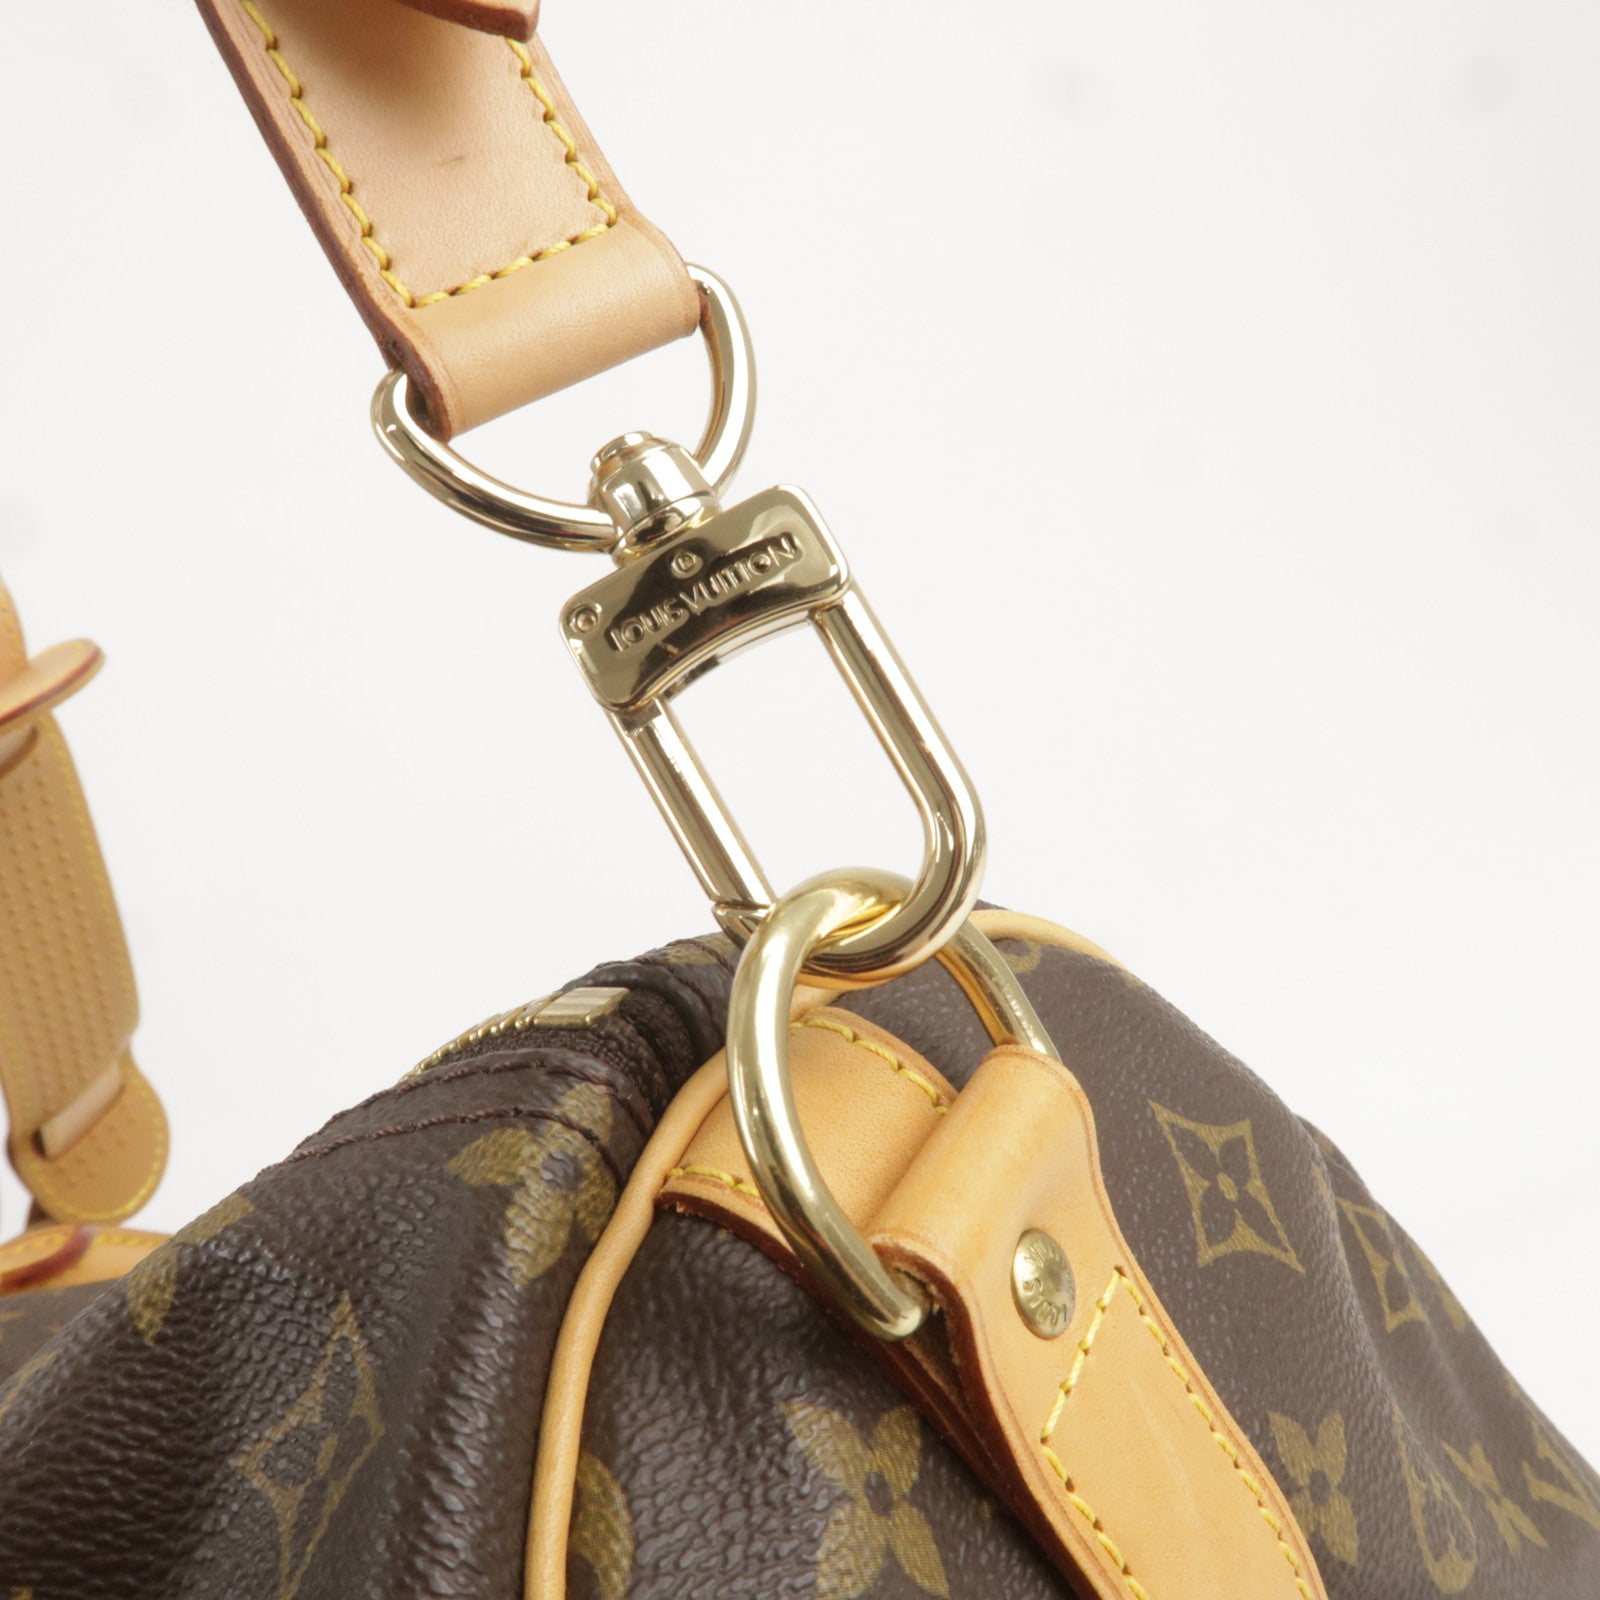 Vintage Louis Vuitton Keepall 60 Bandouliere Boston Travel Bag M41412